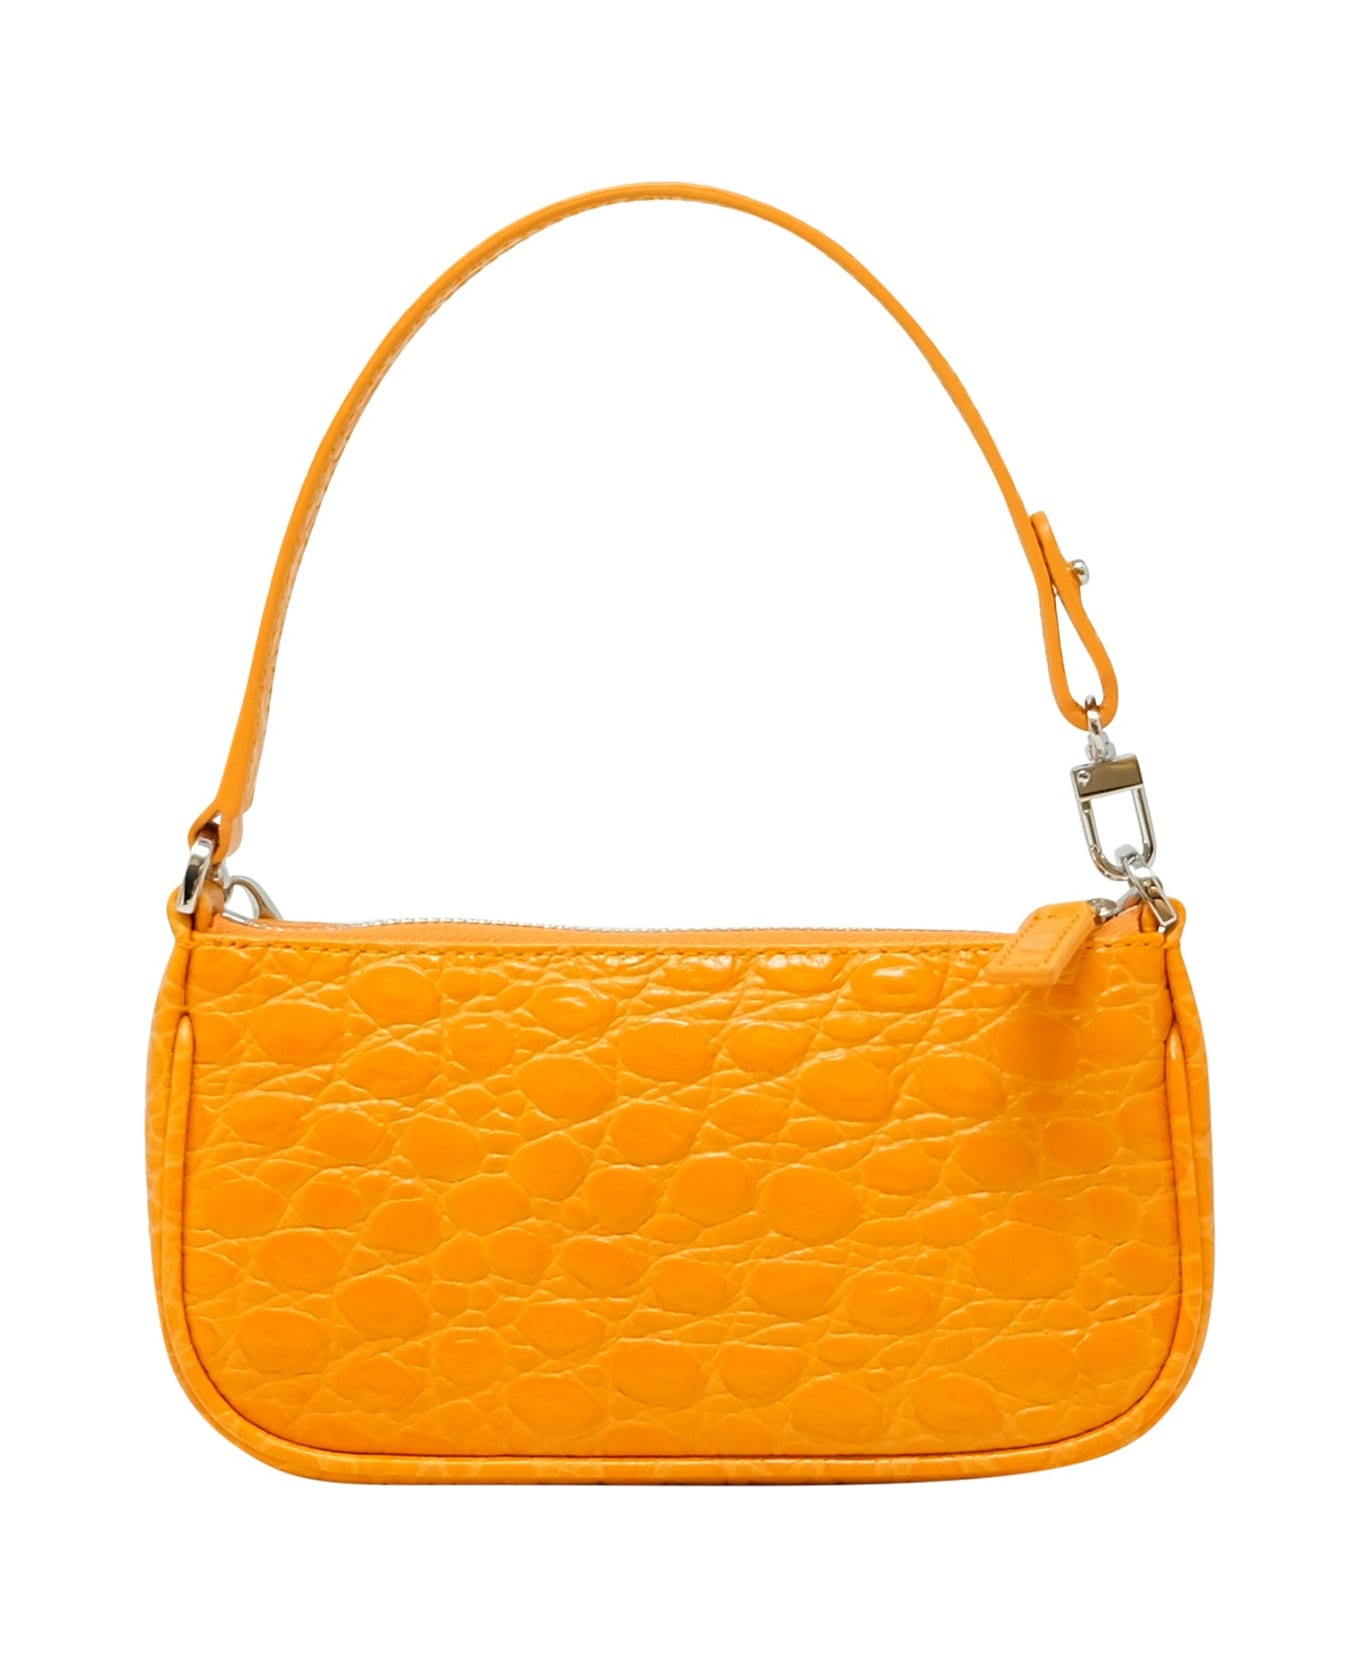 BY FAR Mini Rachel Orange Croco Leather Handbag - ORANGE